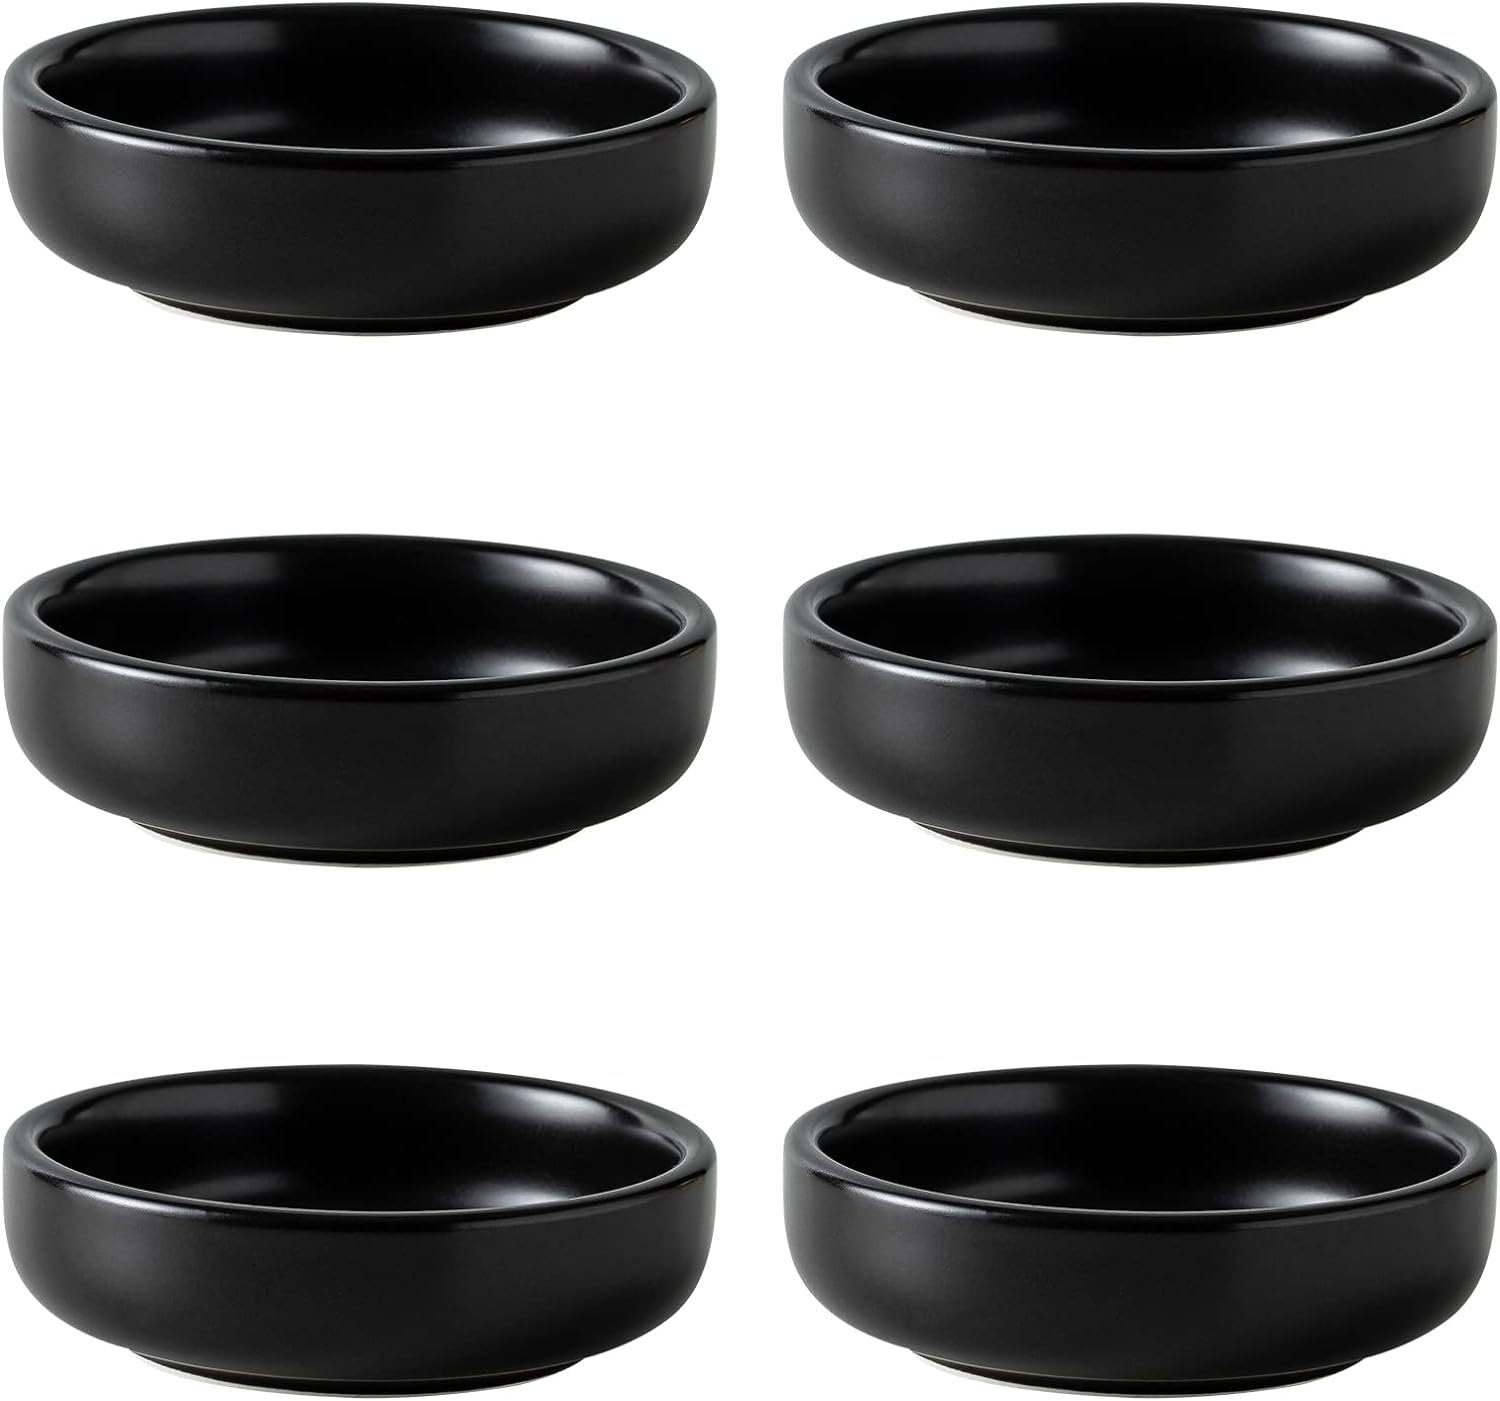 Mini Black Bowls.jpg